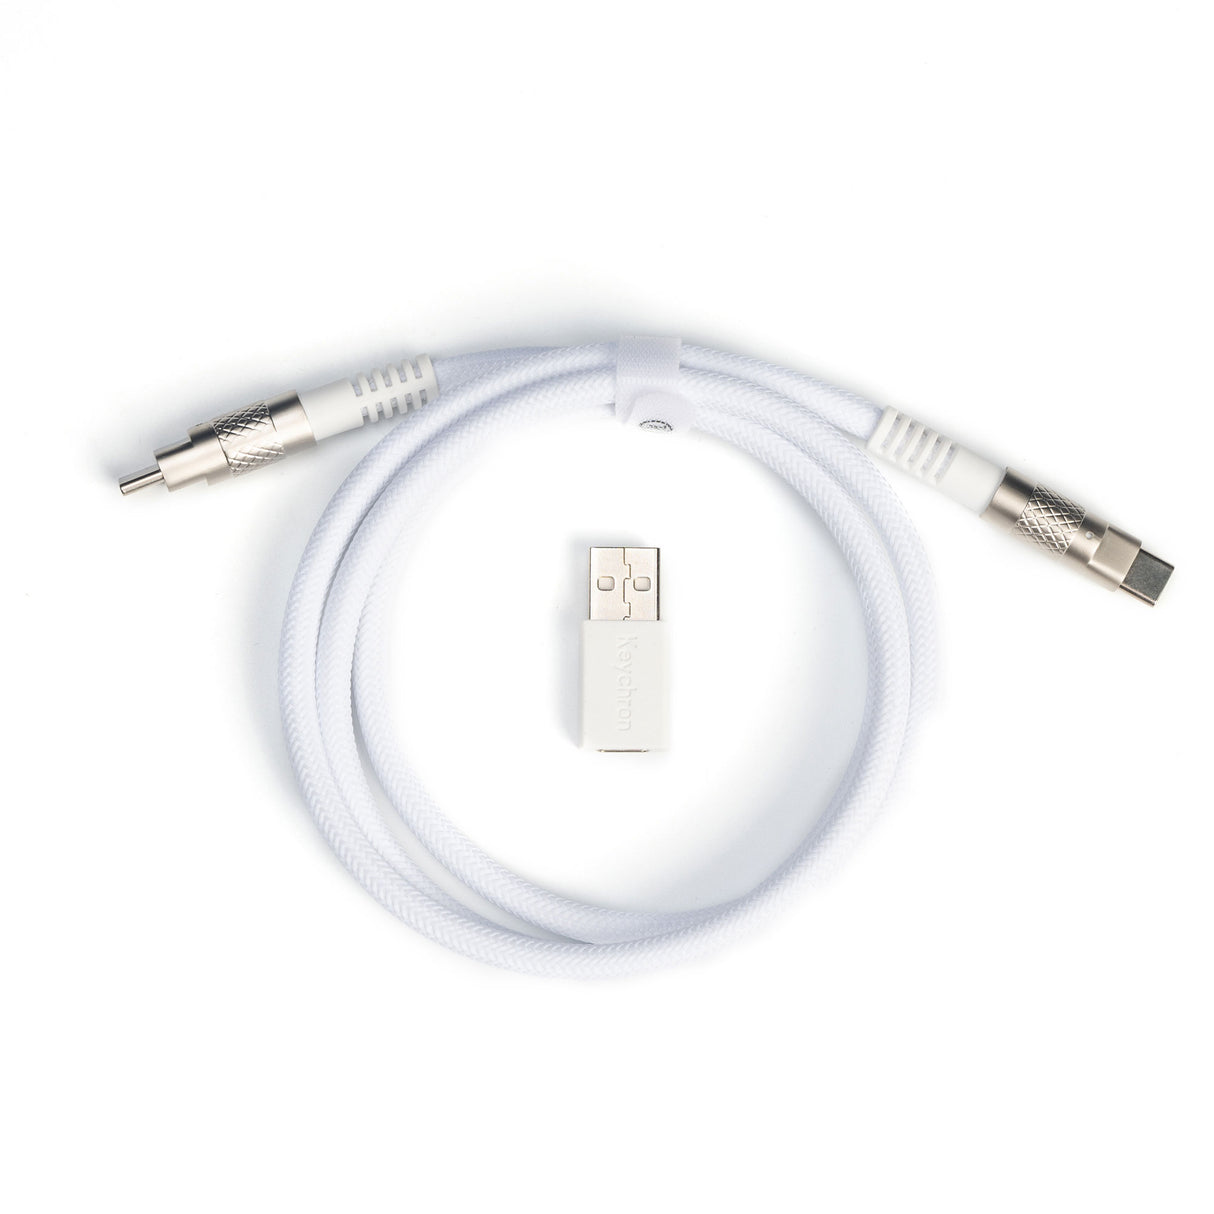 Câble double USB 3.0 Type A vers micro-b